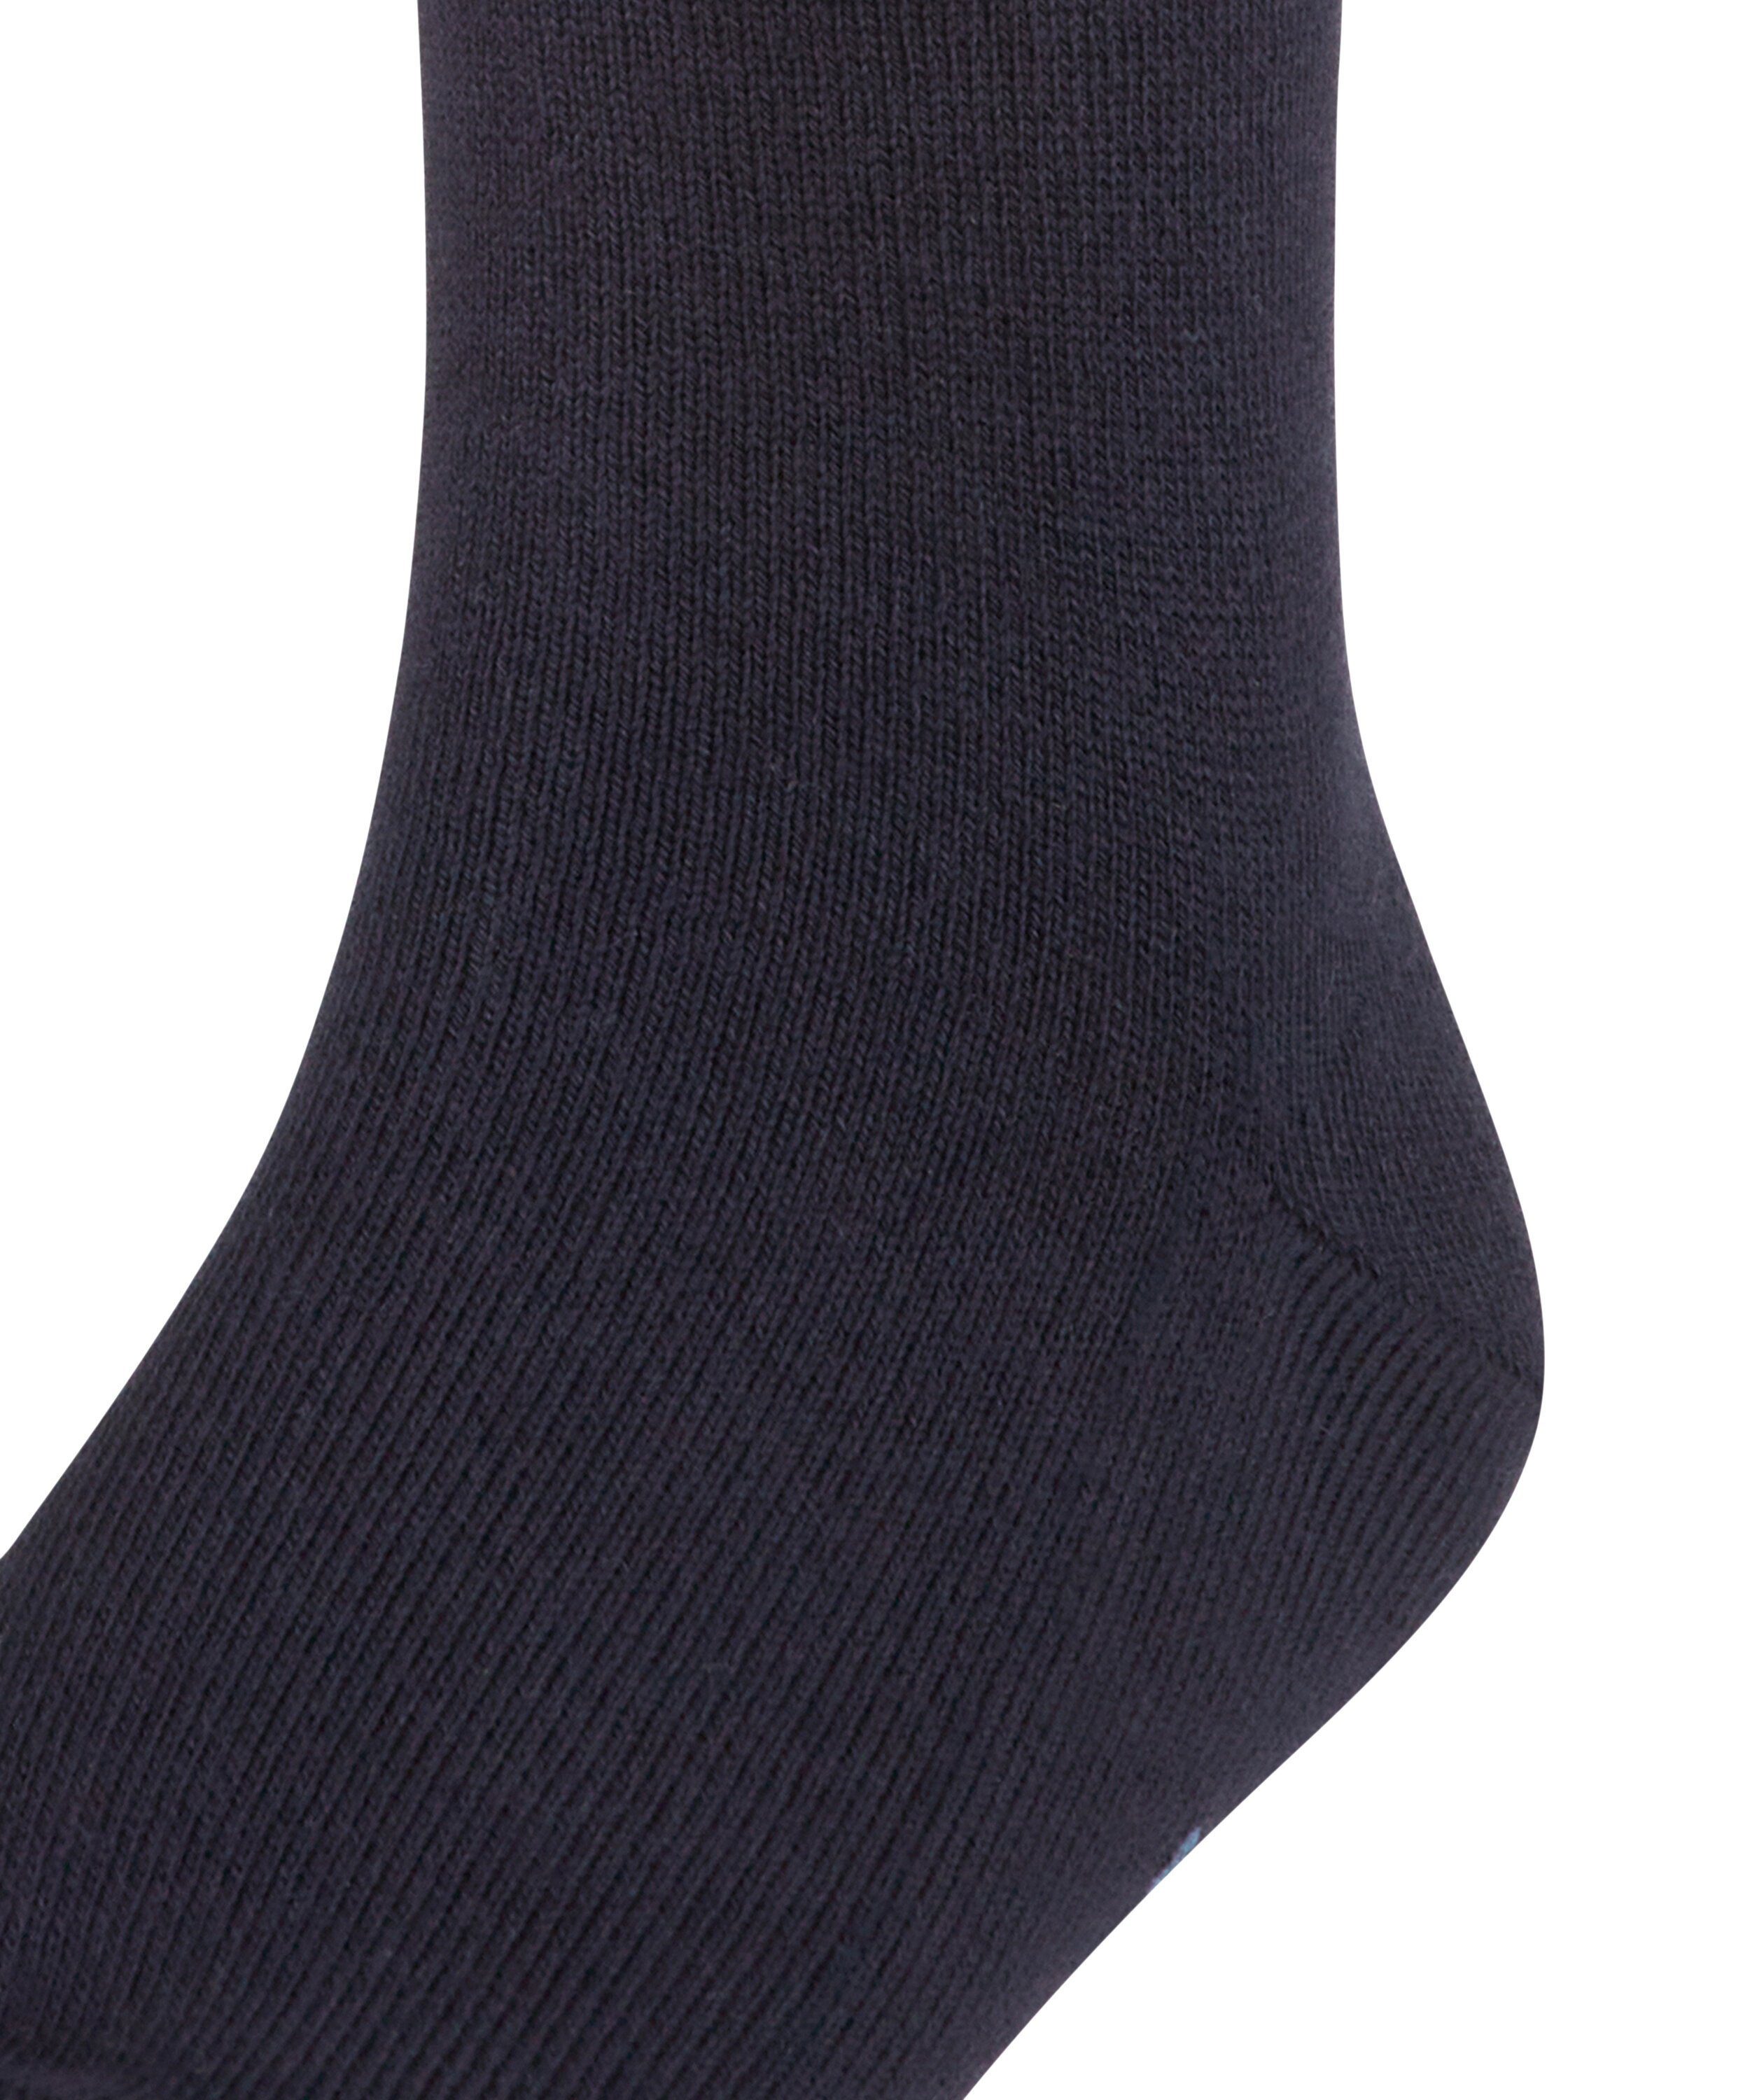 Family (1-Paar) darkmarine Socken FALKE (6170)